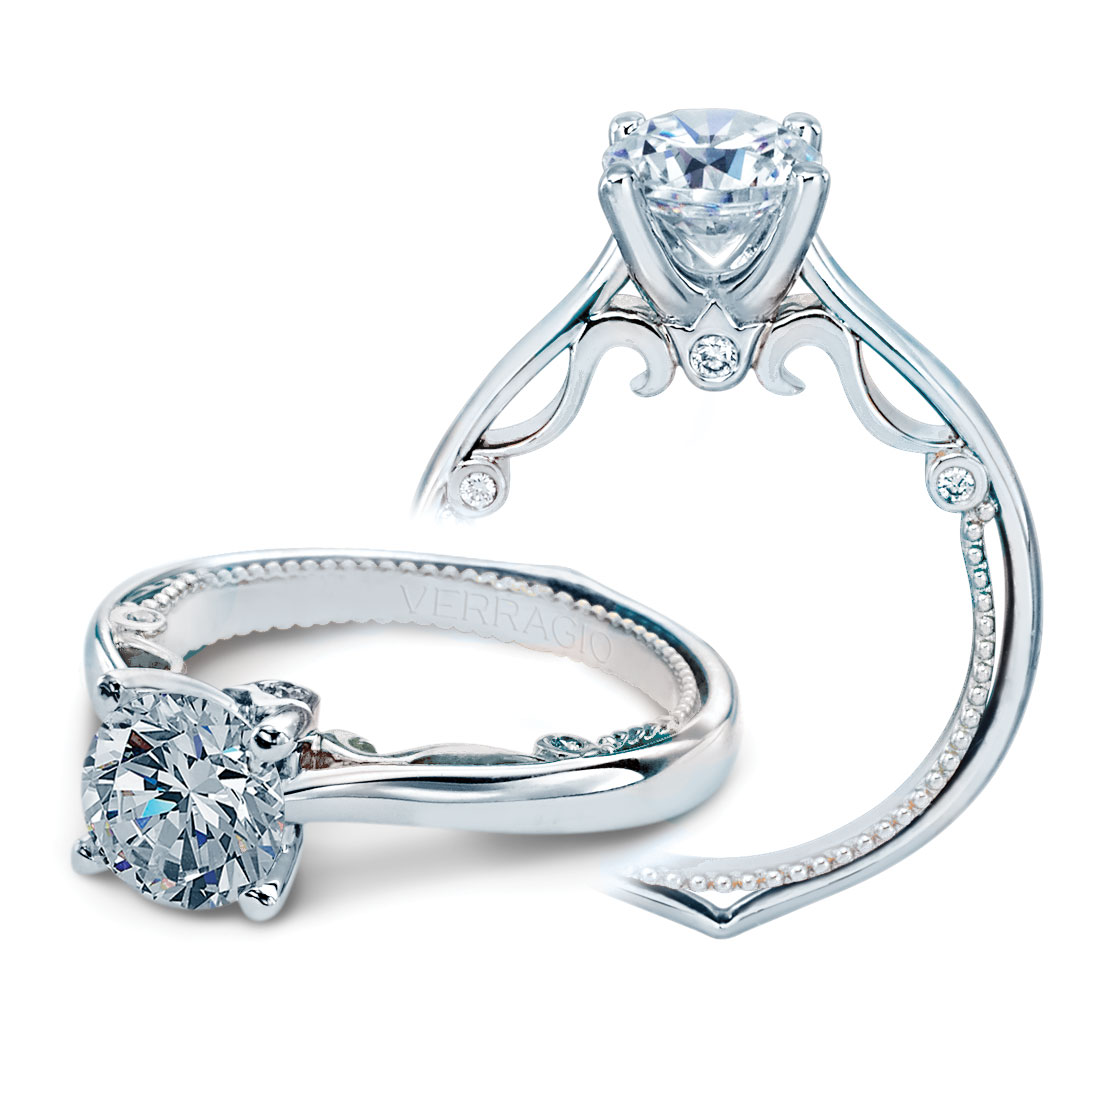 Diamond Engagement Ring Created by Verragio